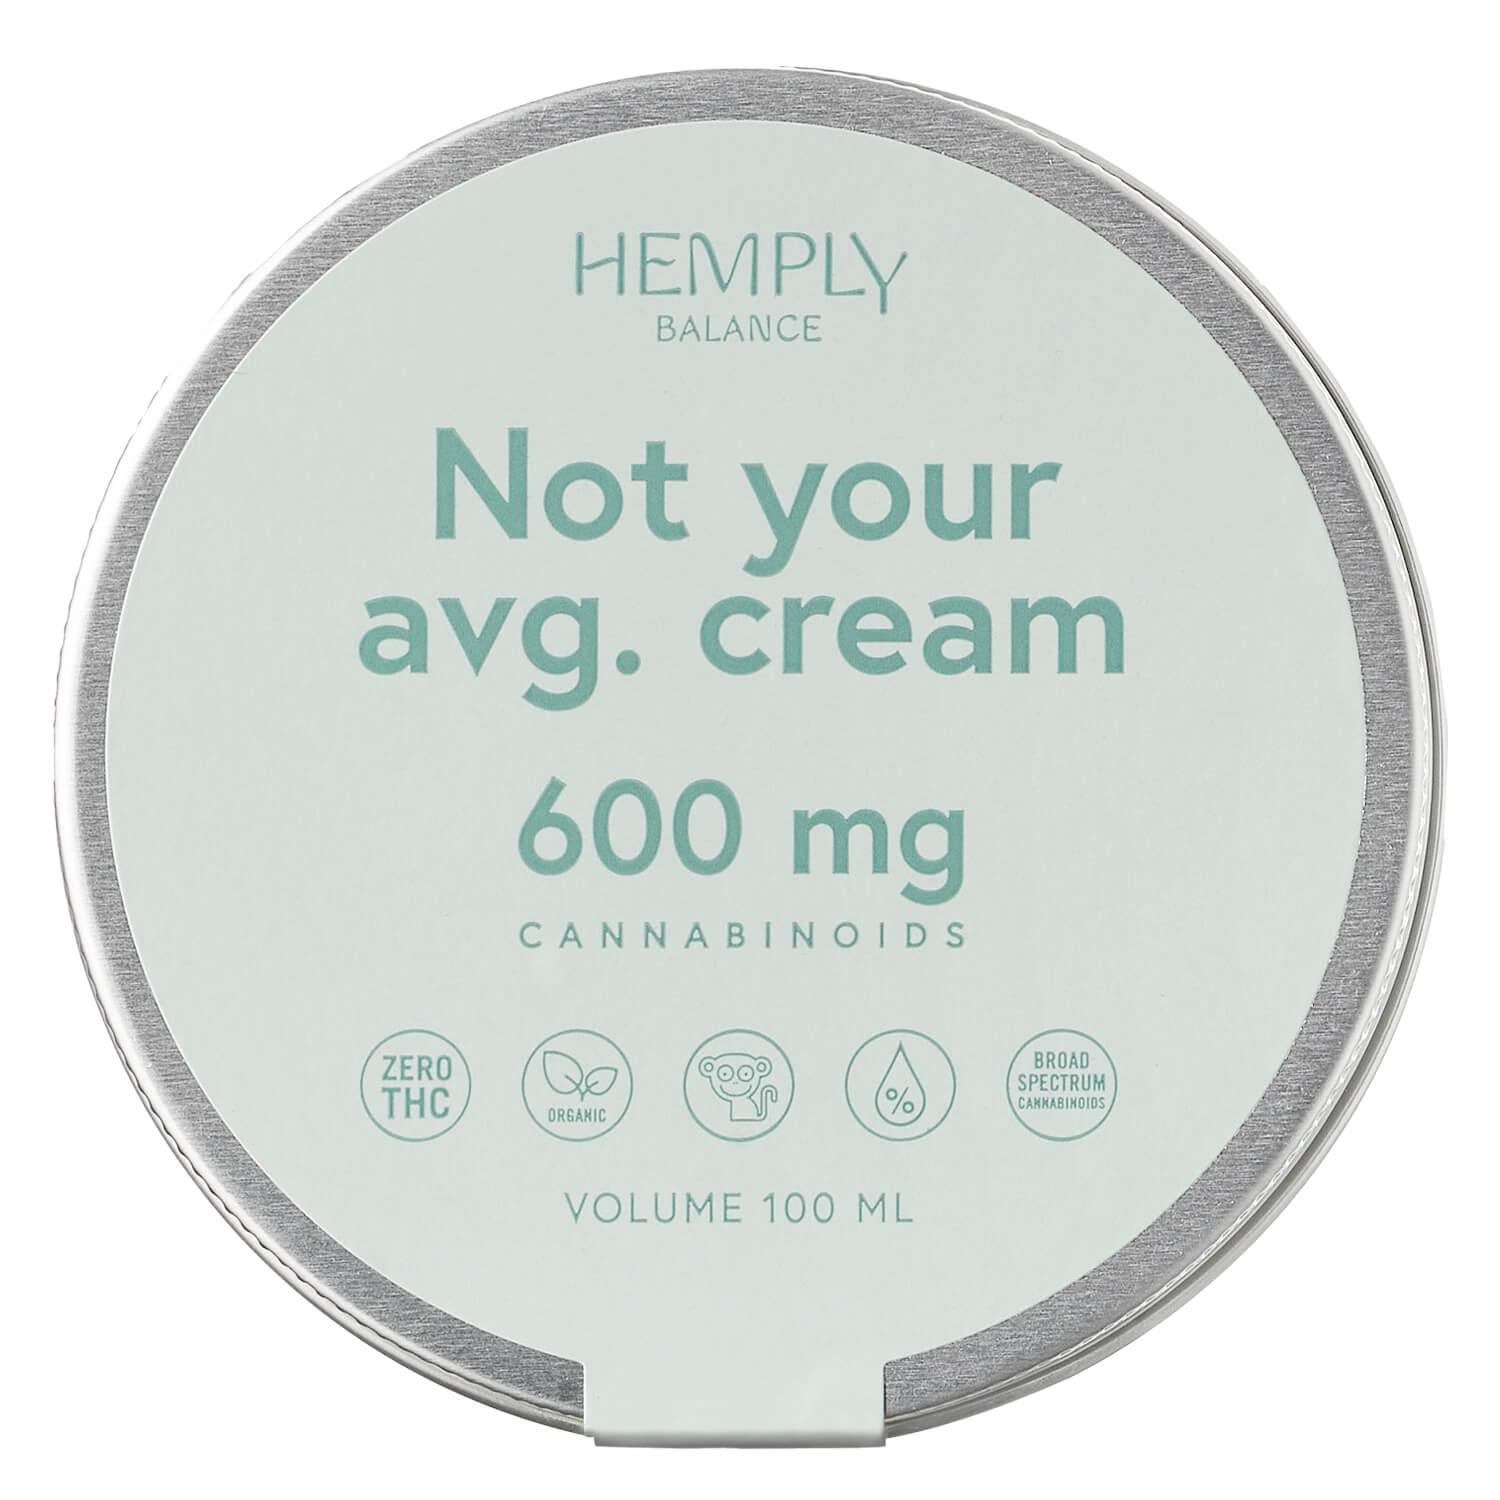 HEMPLY Balance - Not your avg. cream